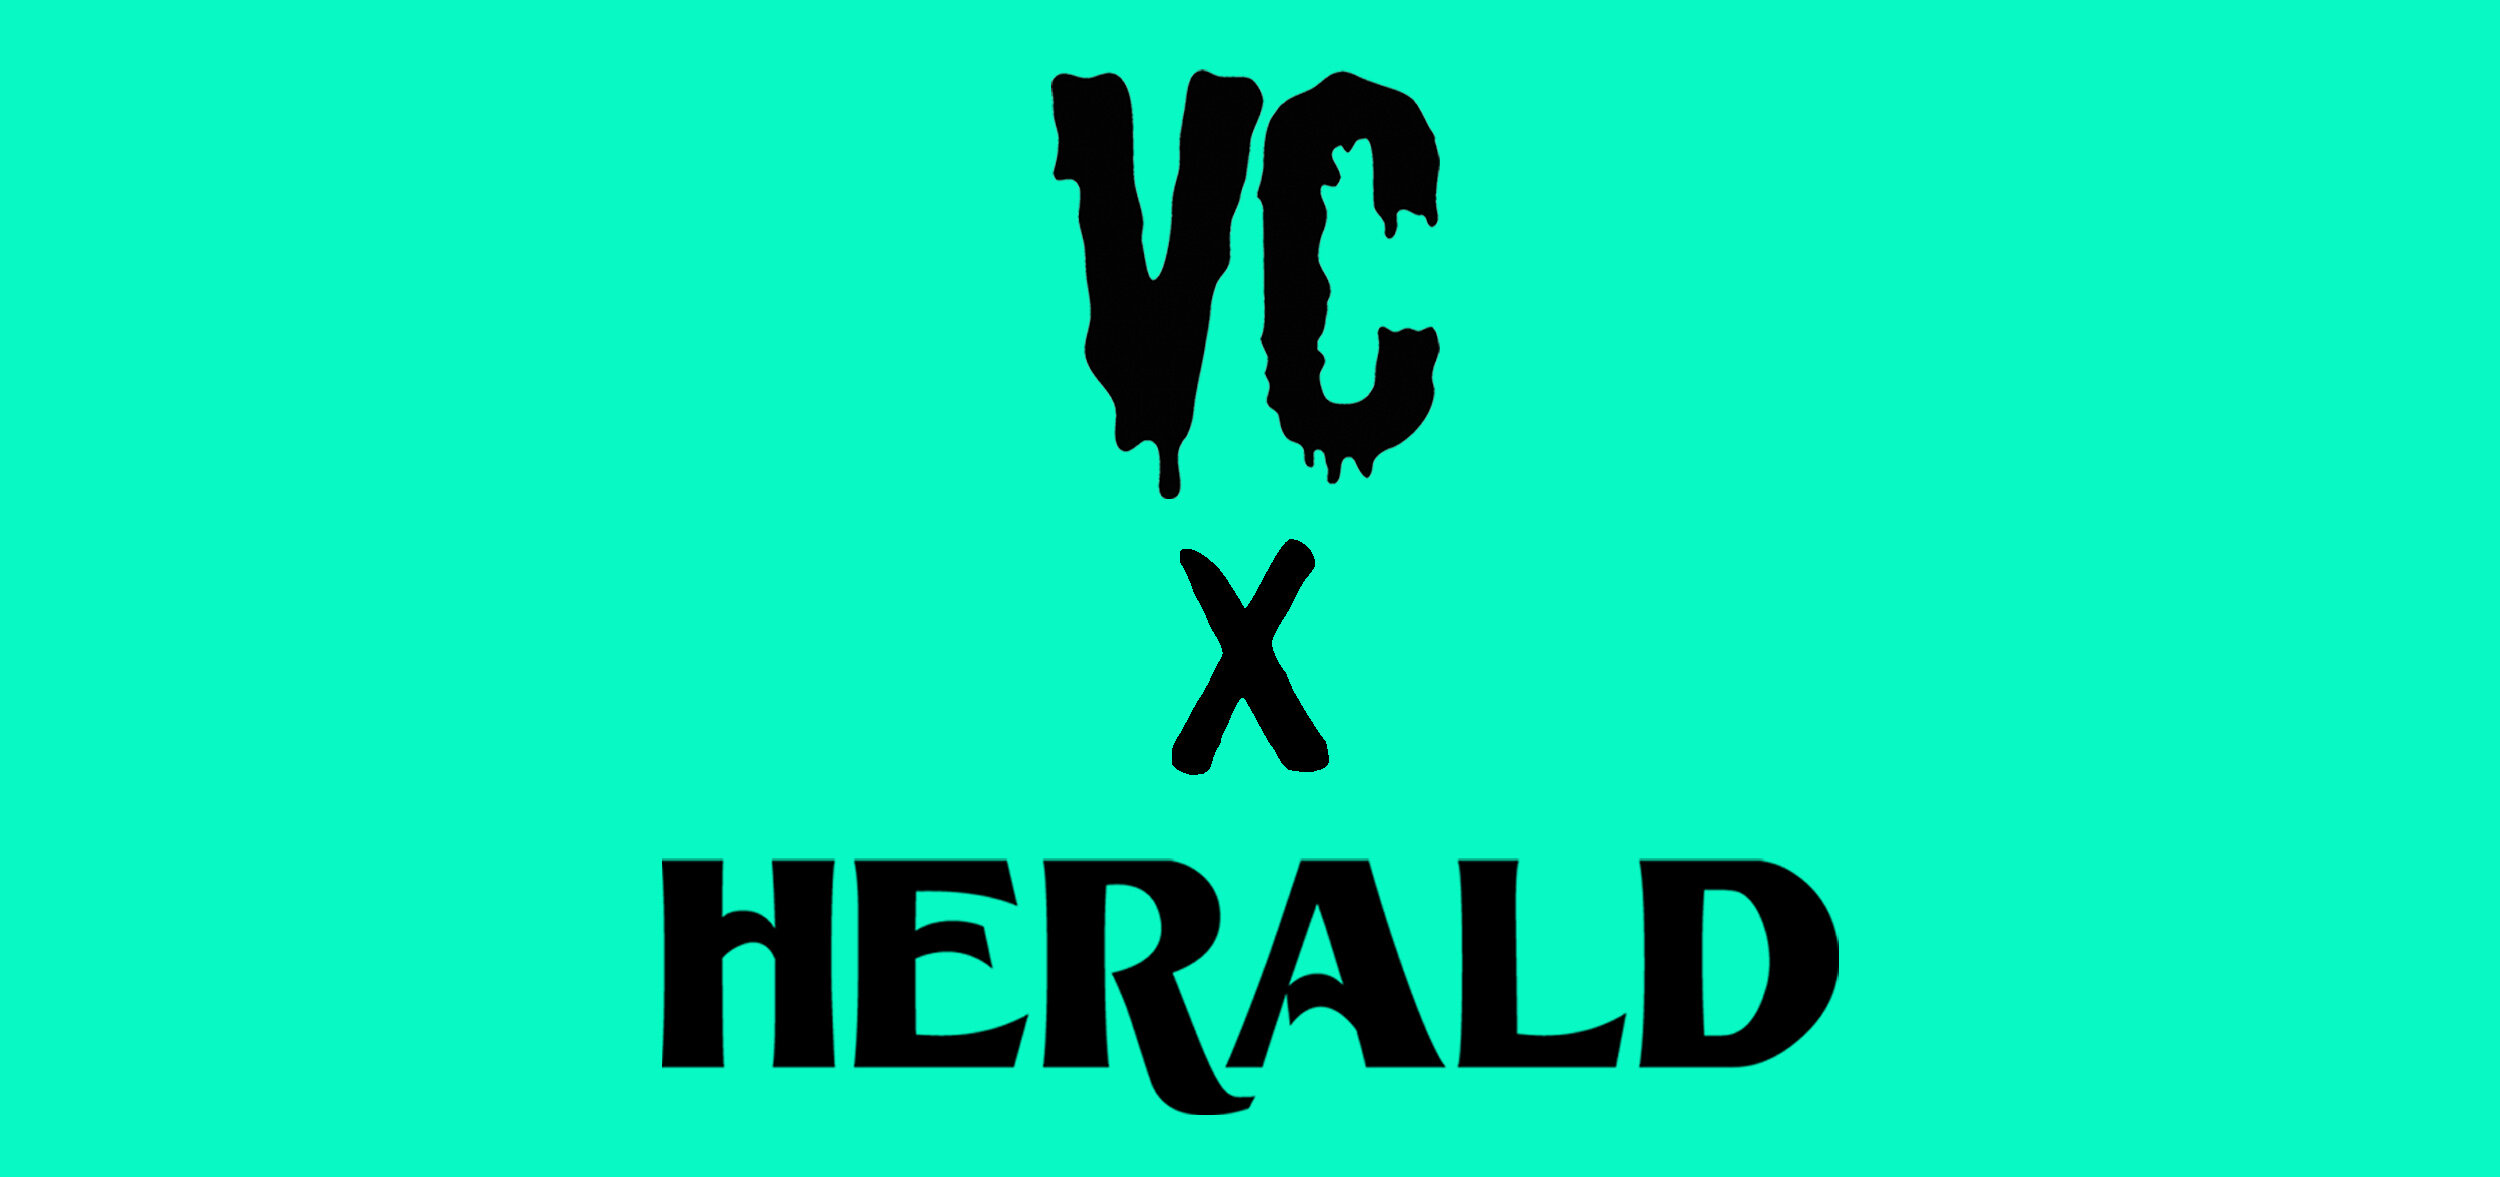 VC X HERALD MOTO BEGINNERS SCHOOL.jpg